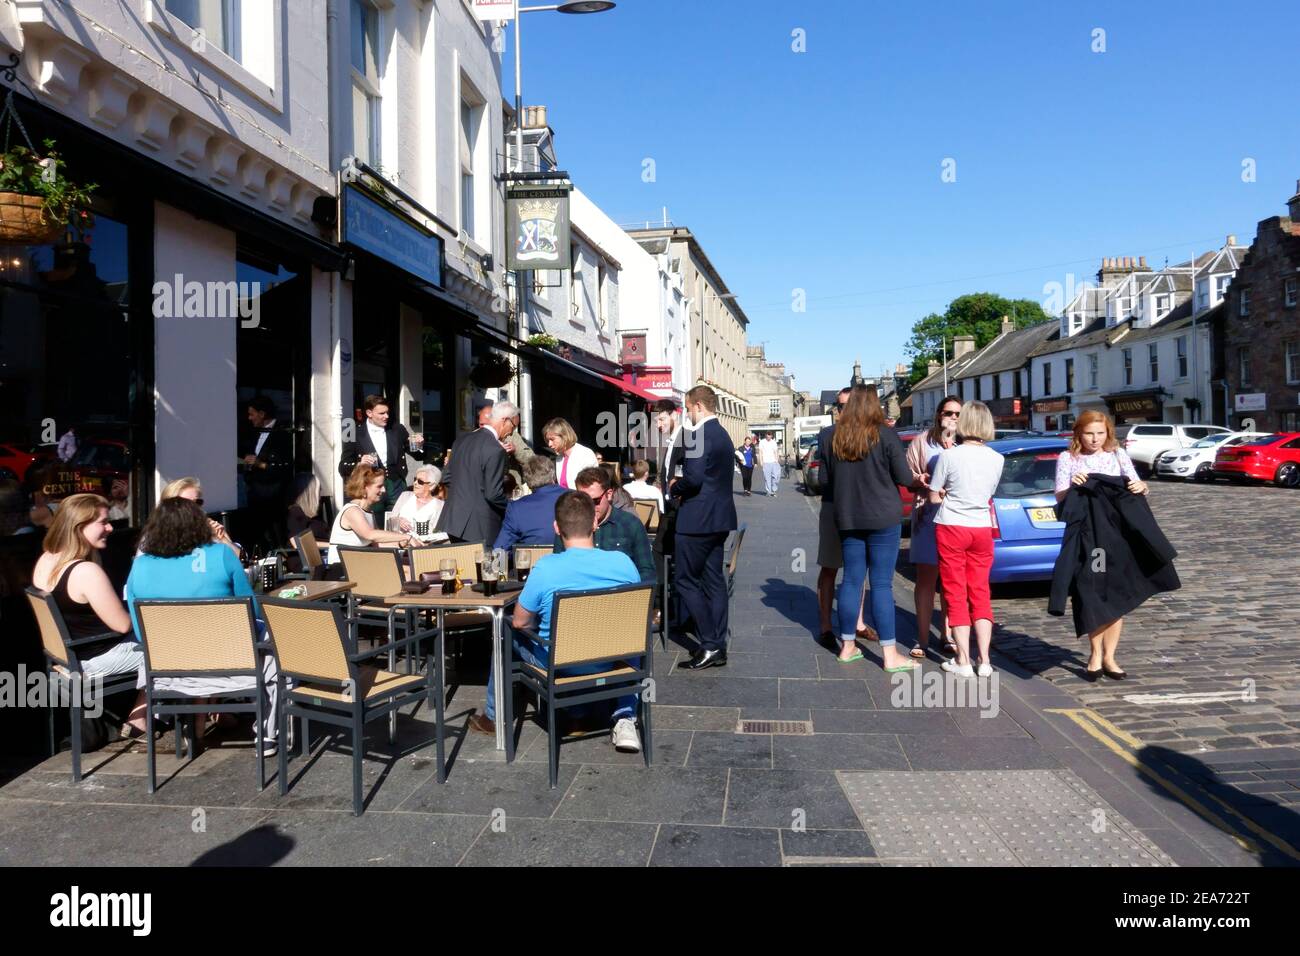 St Andrews Scotland: People socialising and enjoying eating & drinking al fresco in the summer evening sunshine Stock Photo